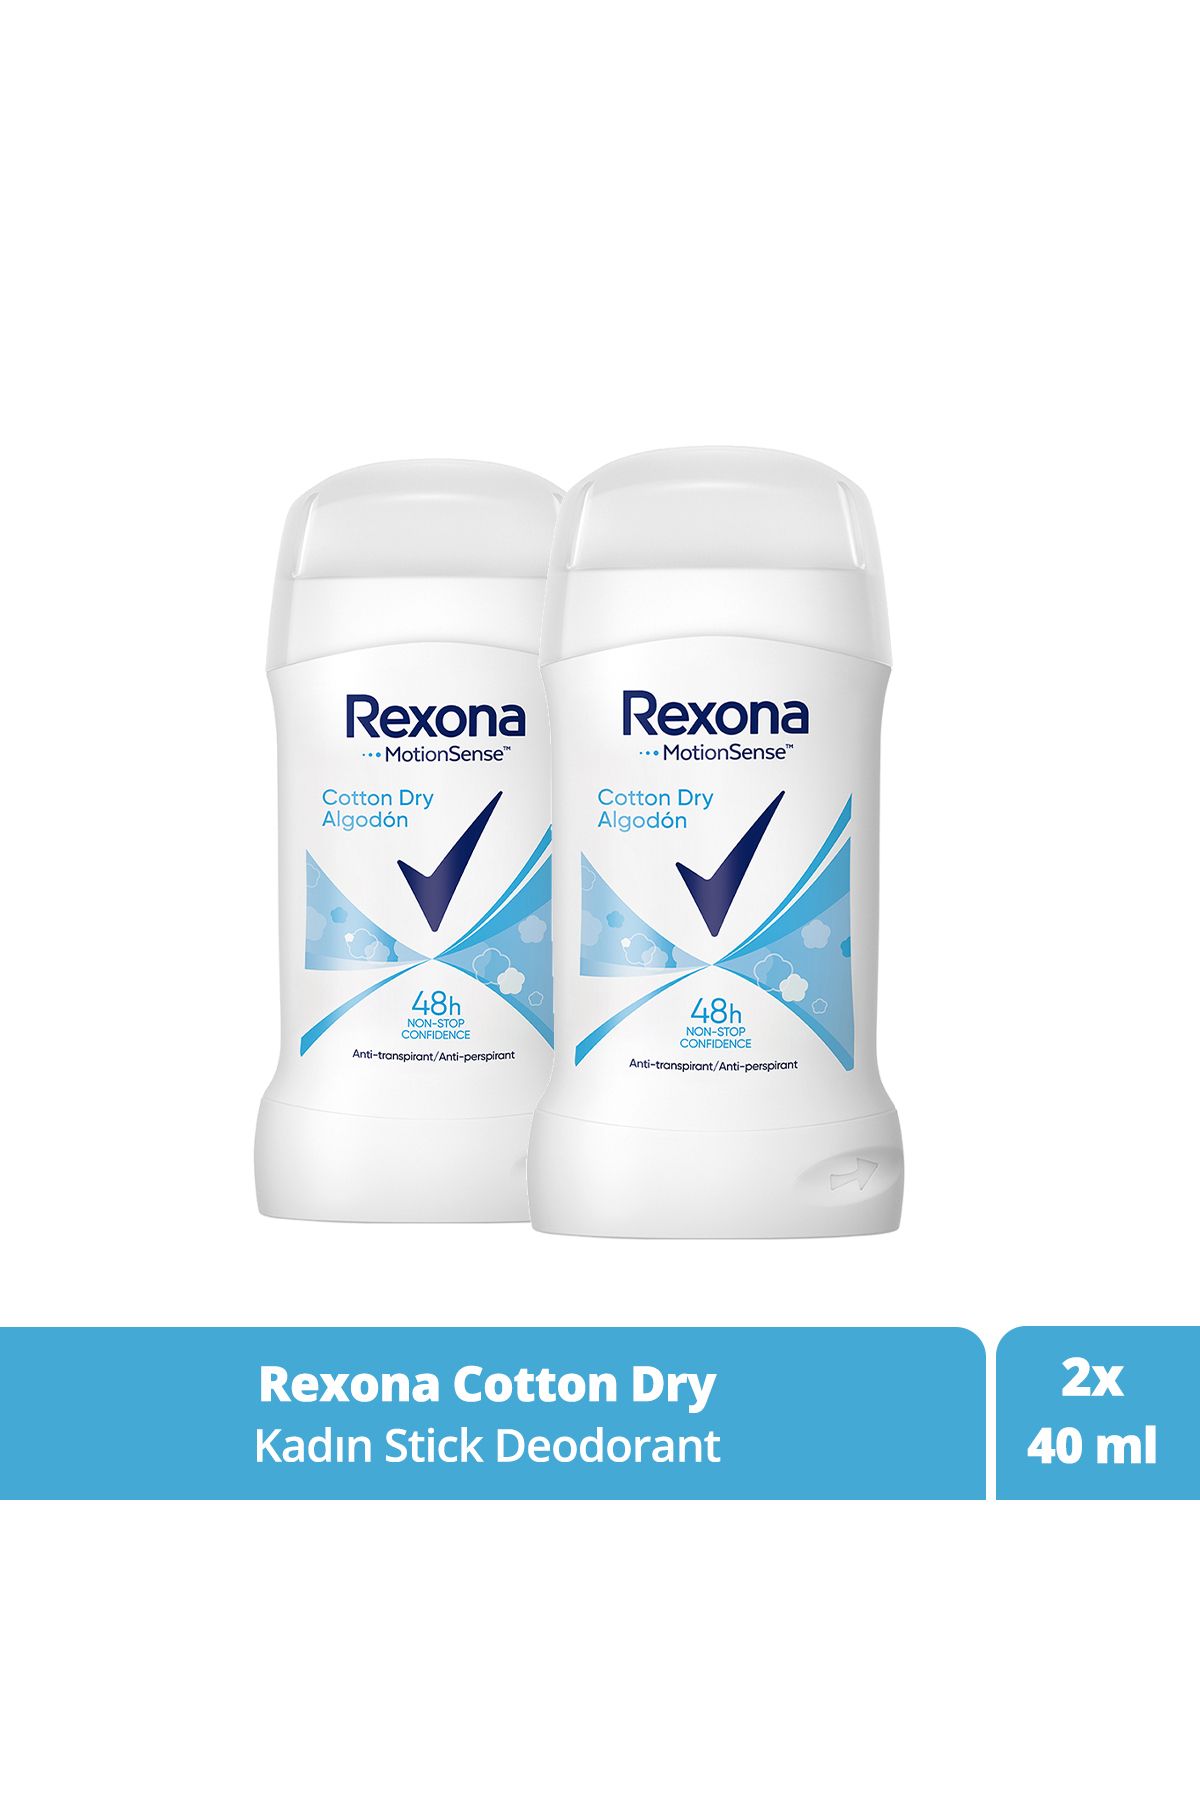 Rexona Kadın Stick Deodorant Cotton Dry 40 ml x2